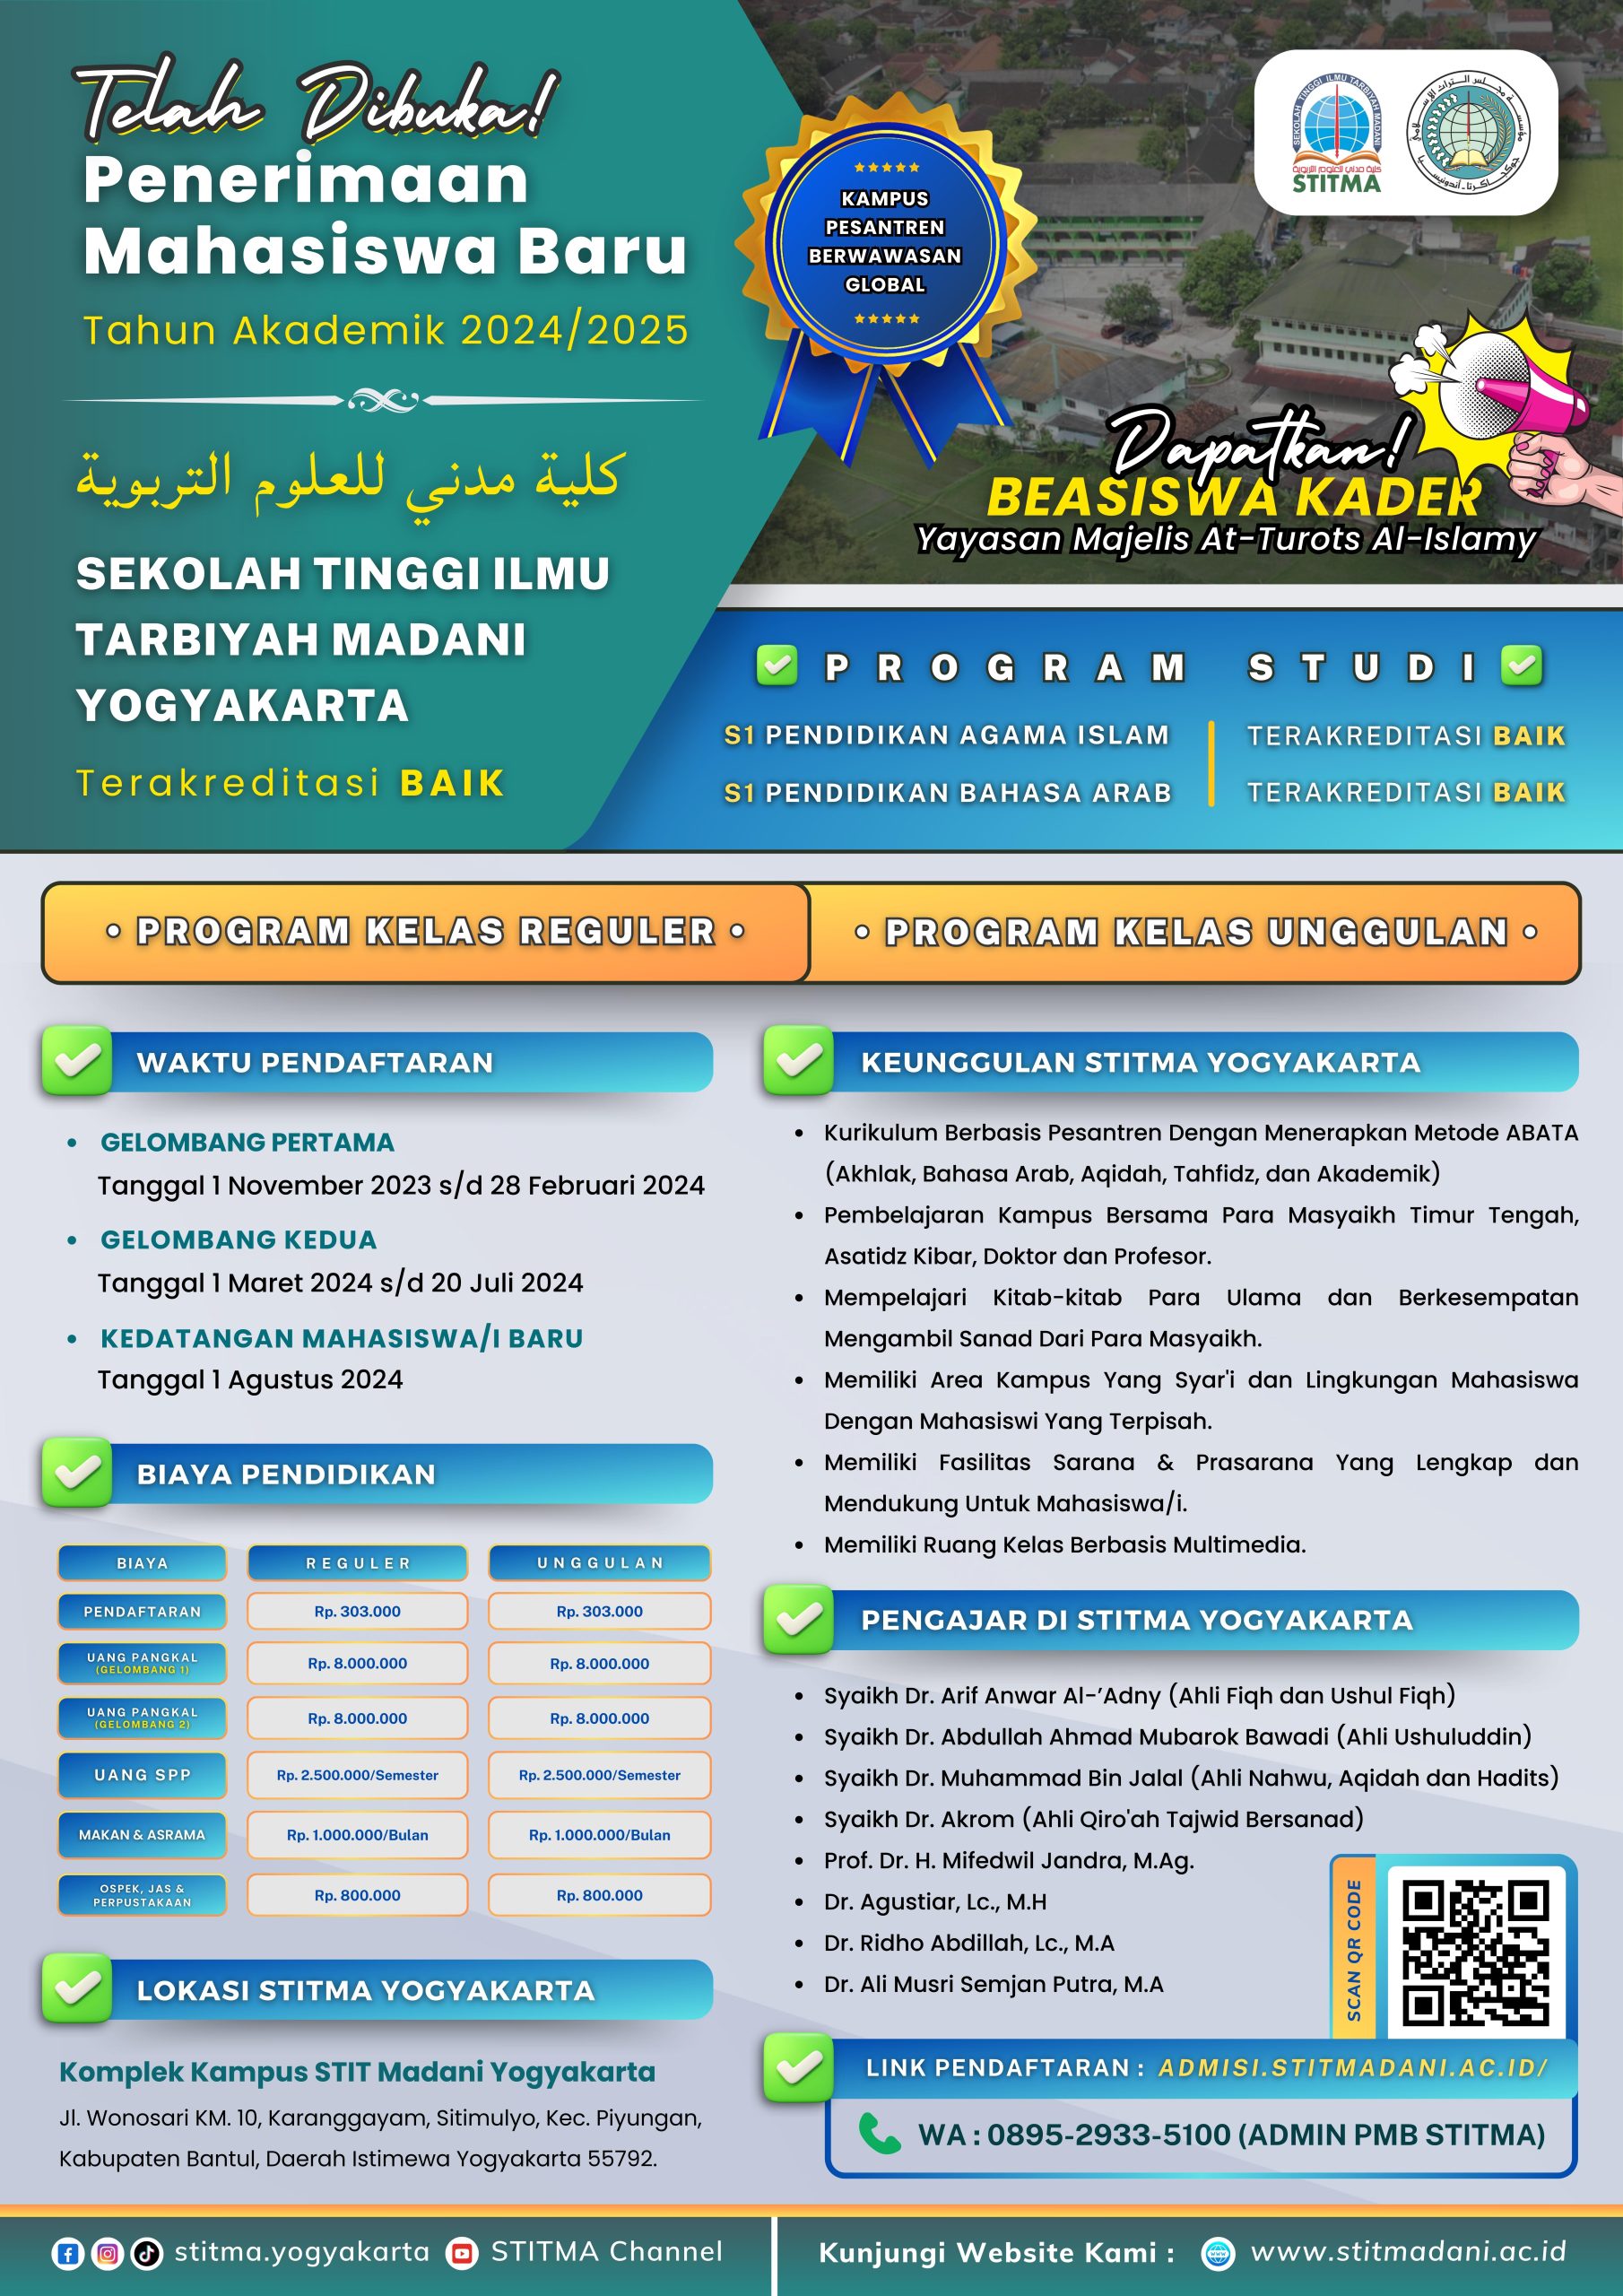 Brosur STITMA Yogyakarta 2024/2025 Hal.1 (download brosur : tekan gambar 2 detik, lalu pilih download)